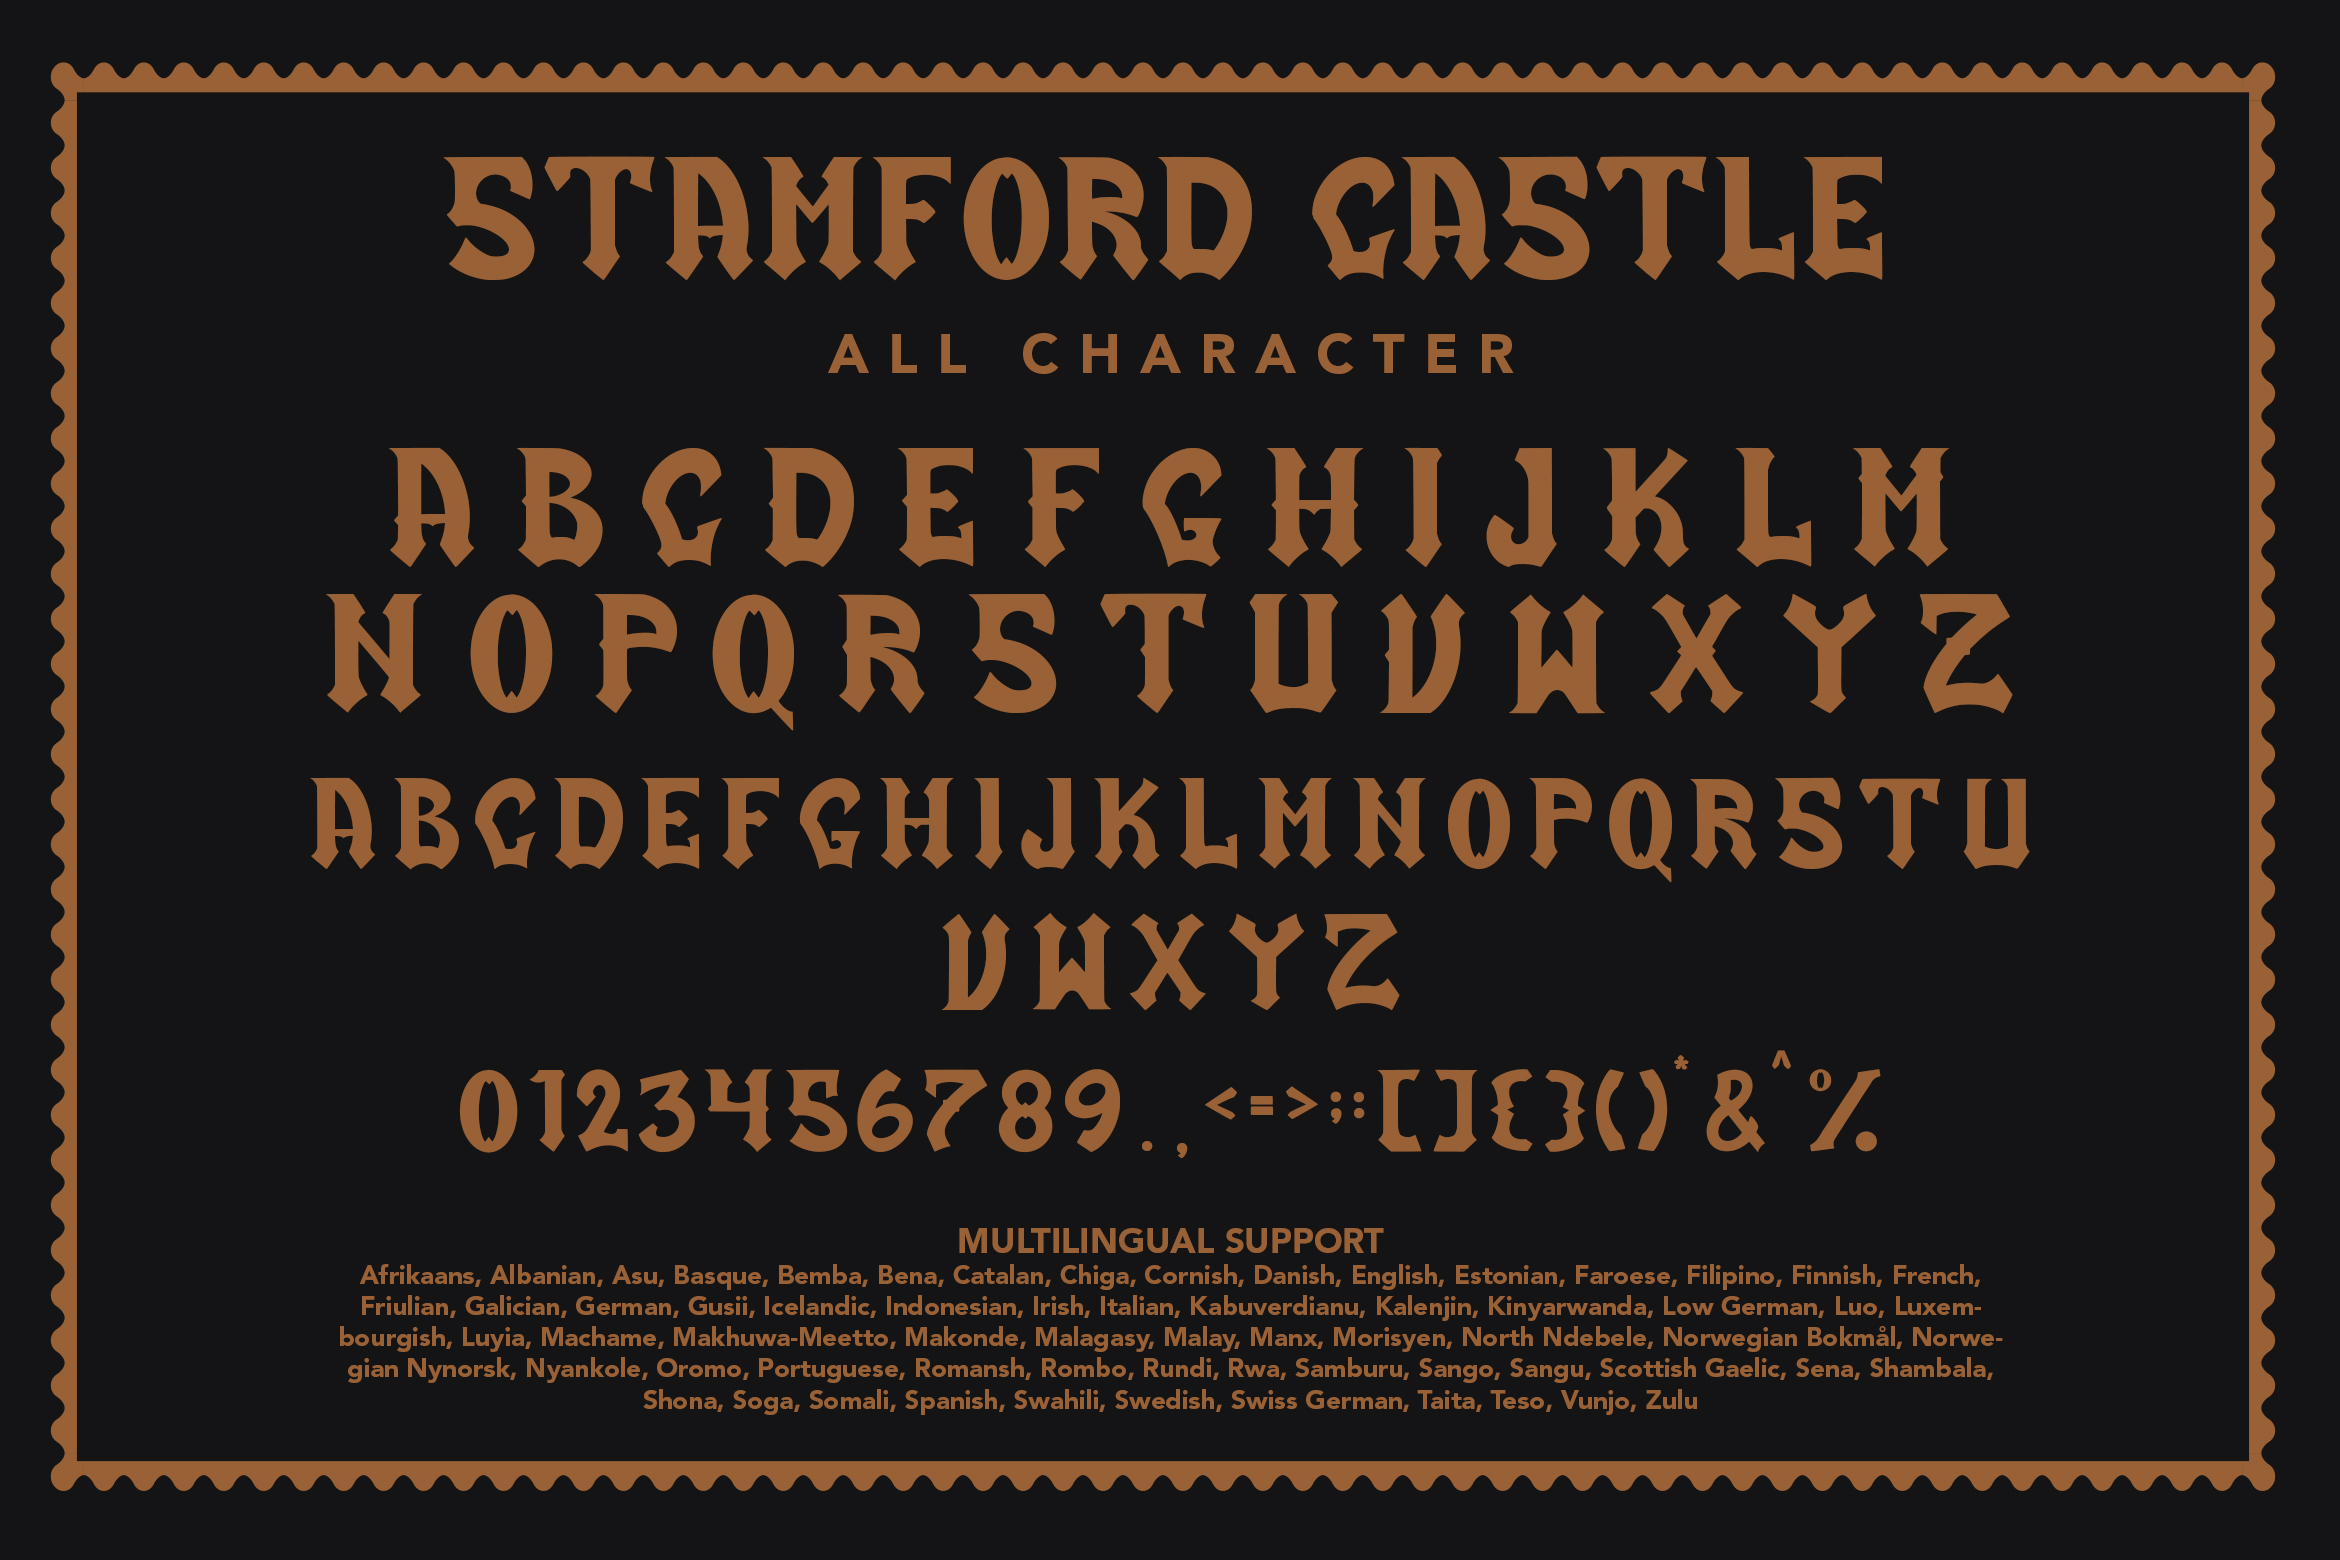 Stamford Castle